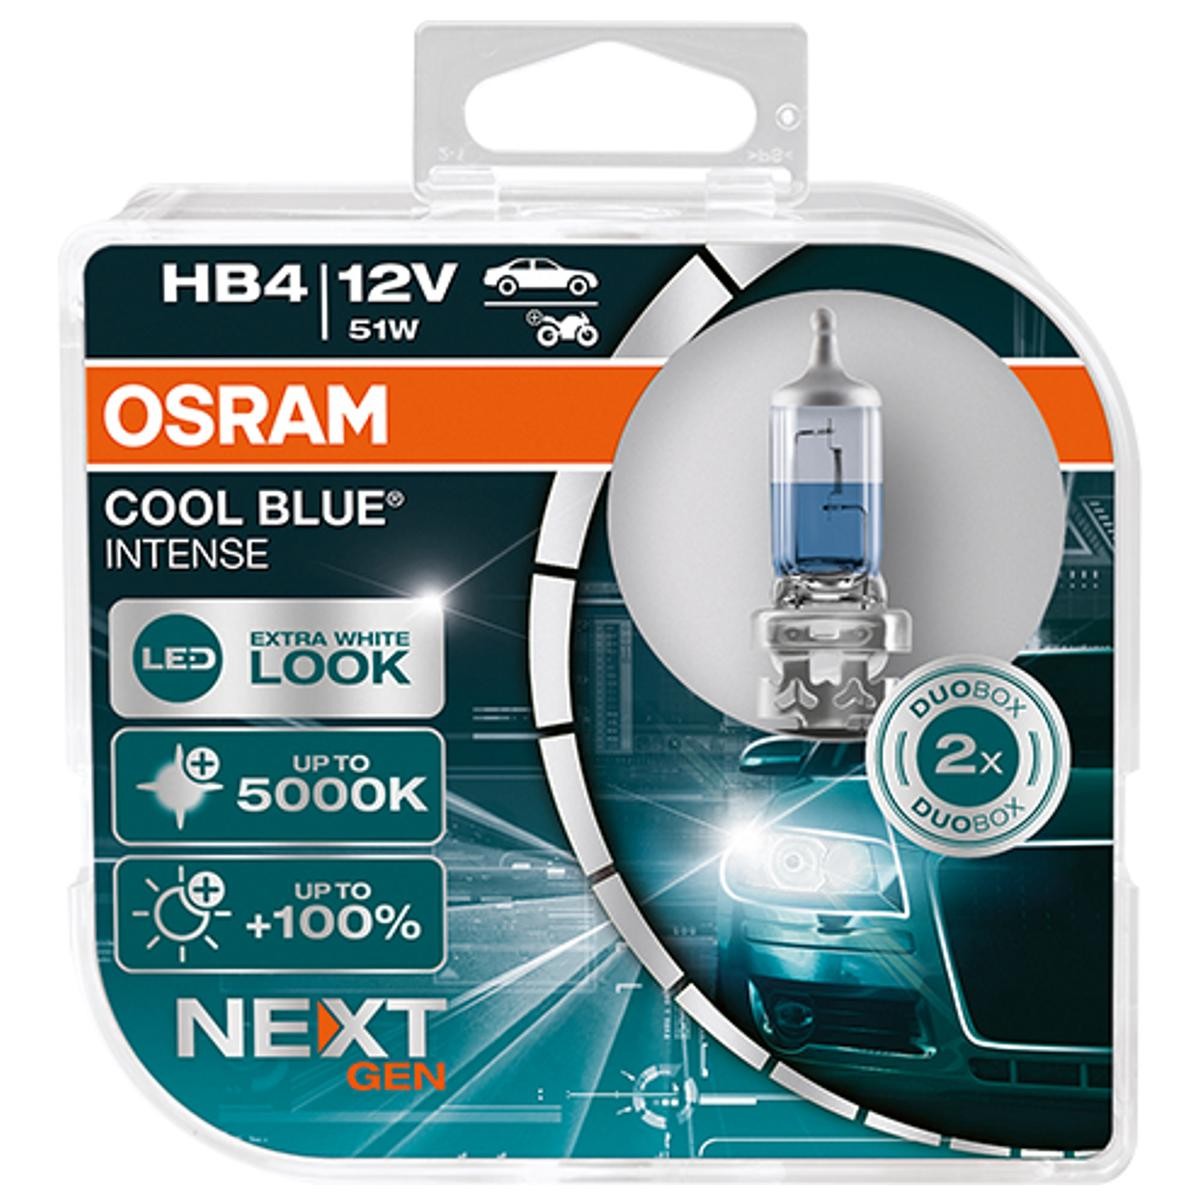 9006CBN-HCB OSRAM COOL BLUE INTENSE next Generation HB4 12V 51W